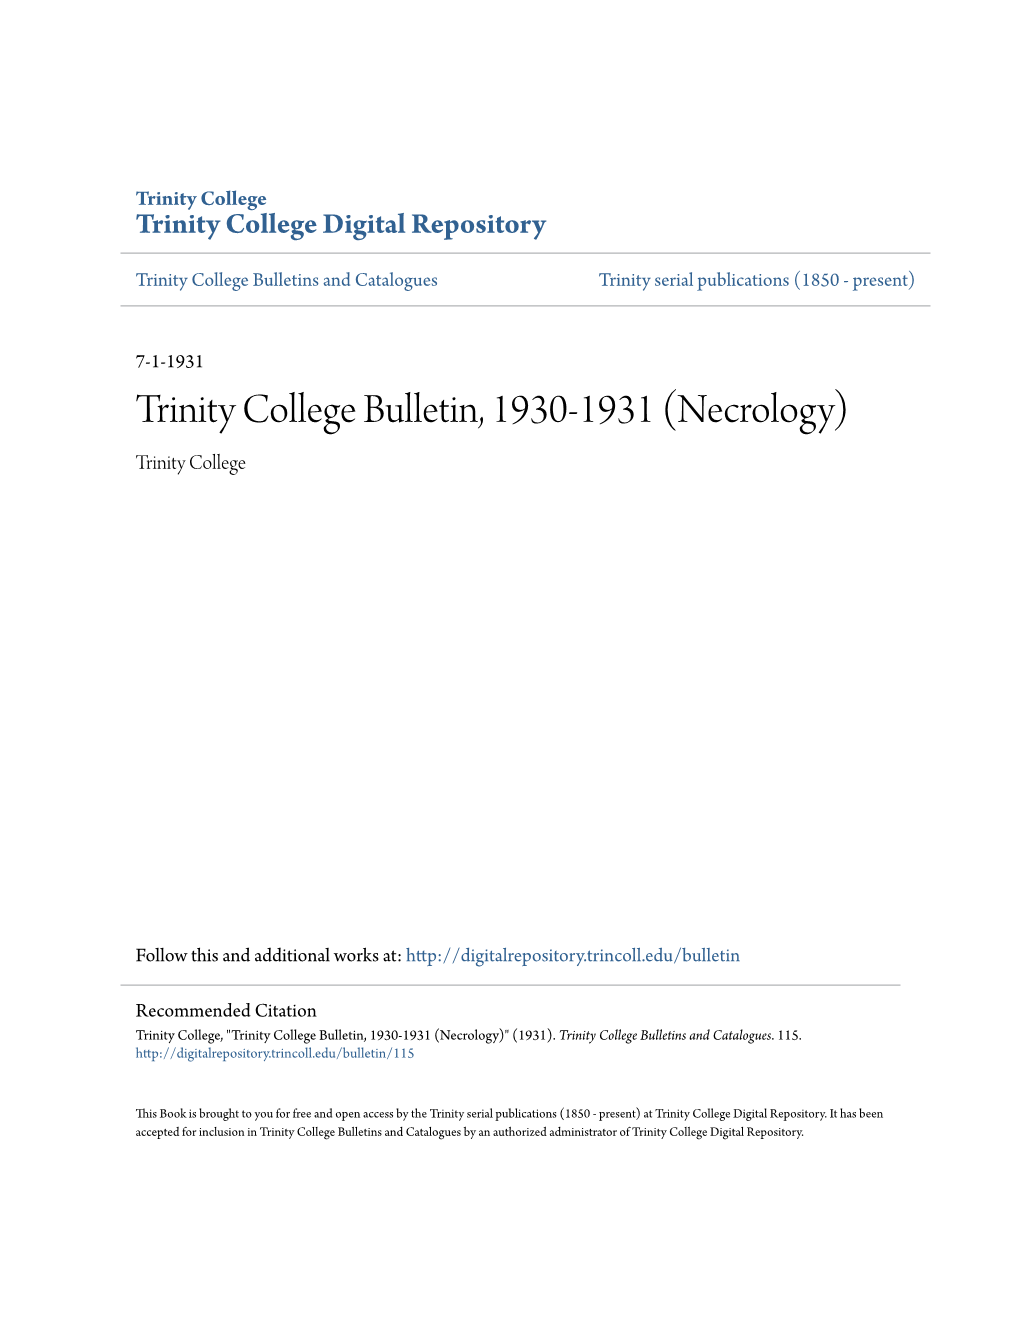 Trinity College Bulletin, 1930-1931 (Necrology) Trinity College